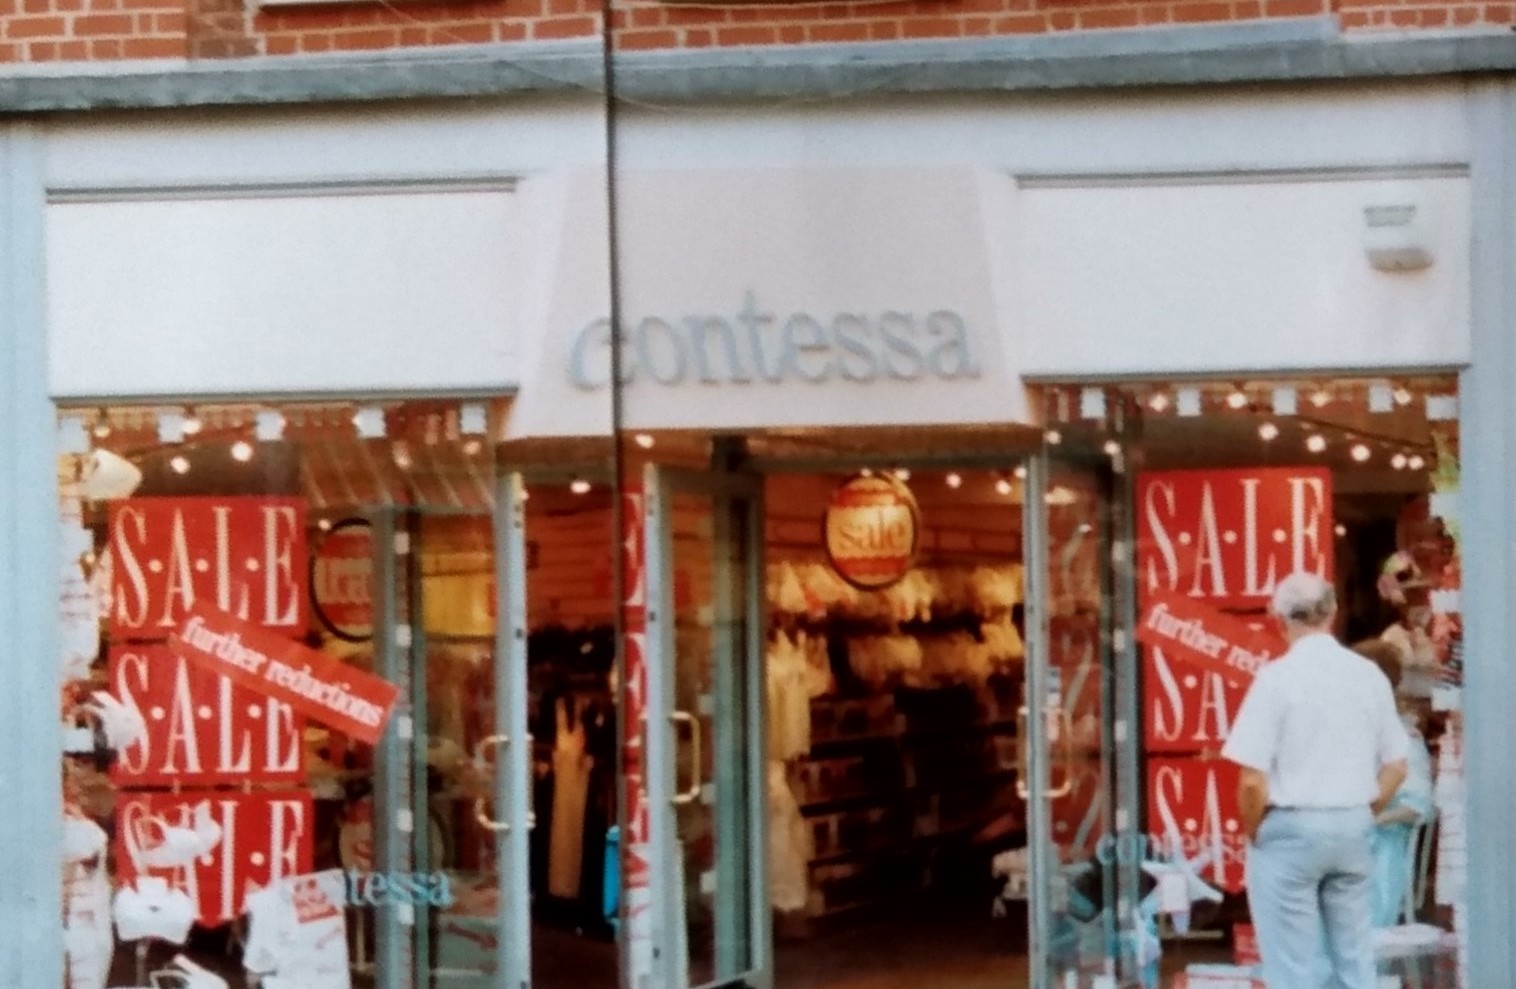 Contessa ladieswear adjoined Curtess